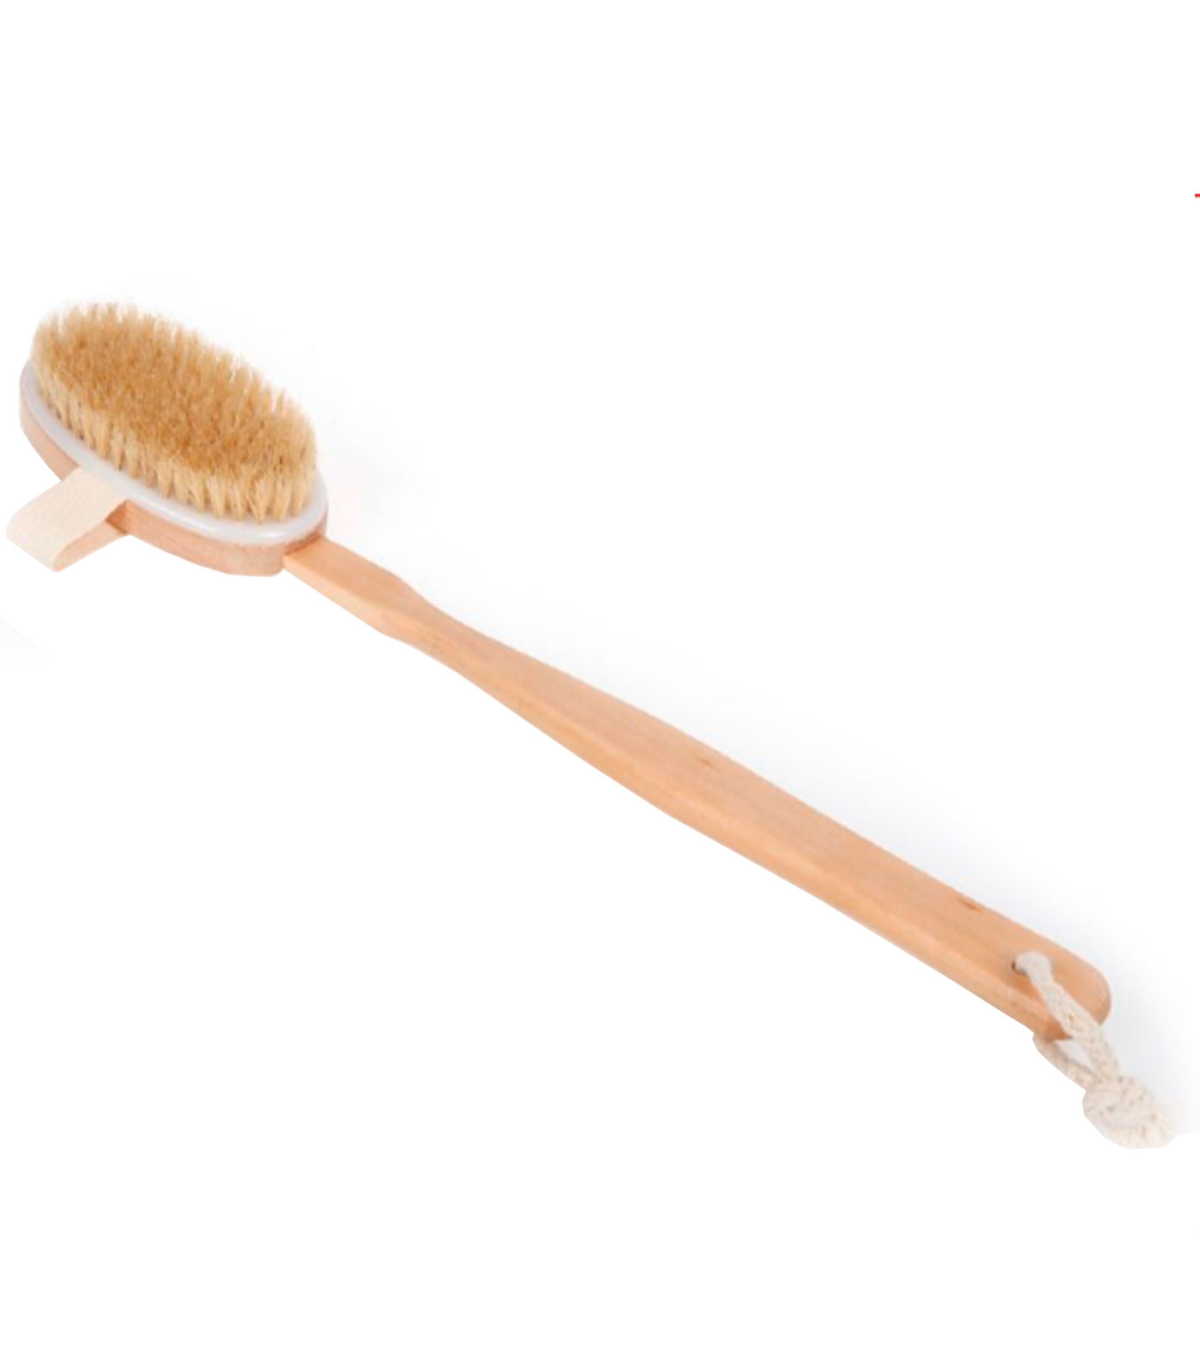 Tradineur - Cepillo de ducha con mango de madera, cerdas naturales suaves,  cepillo para espalda, masaje o exfoliación de cuerpo